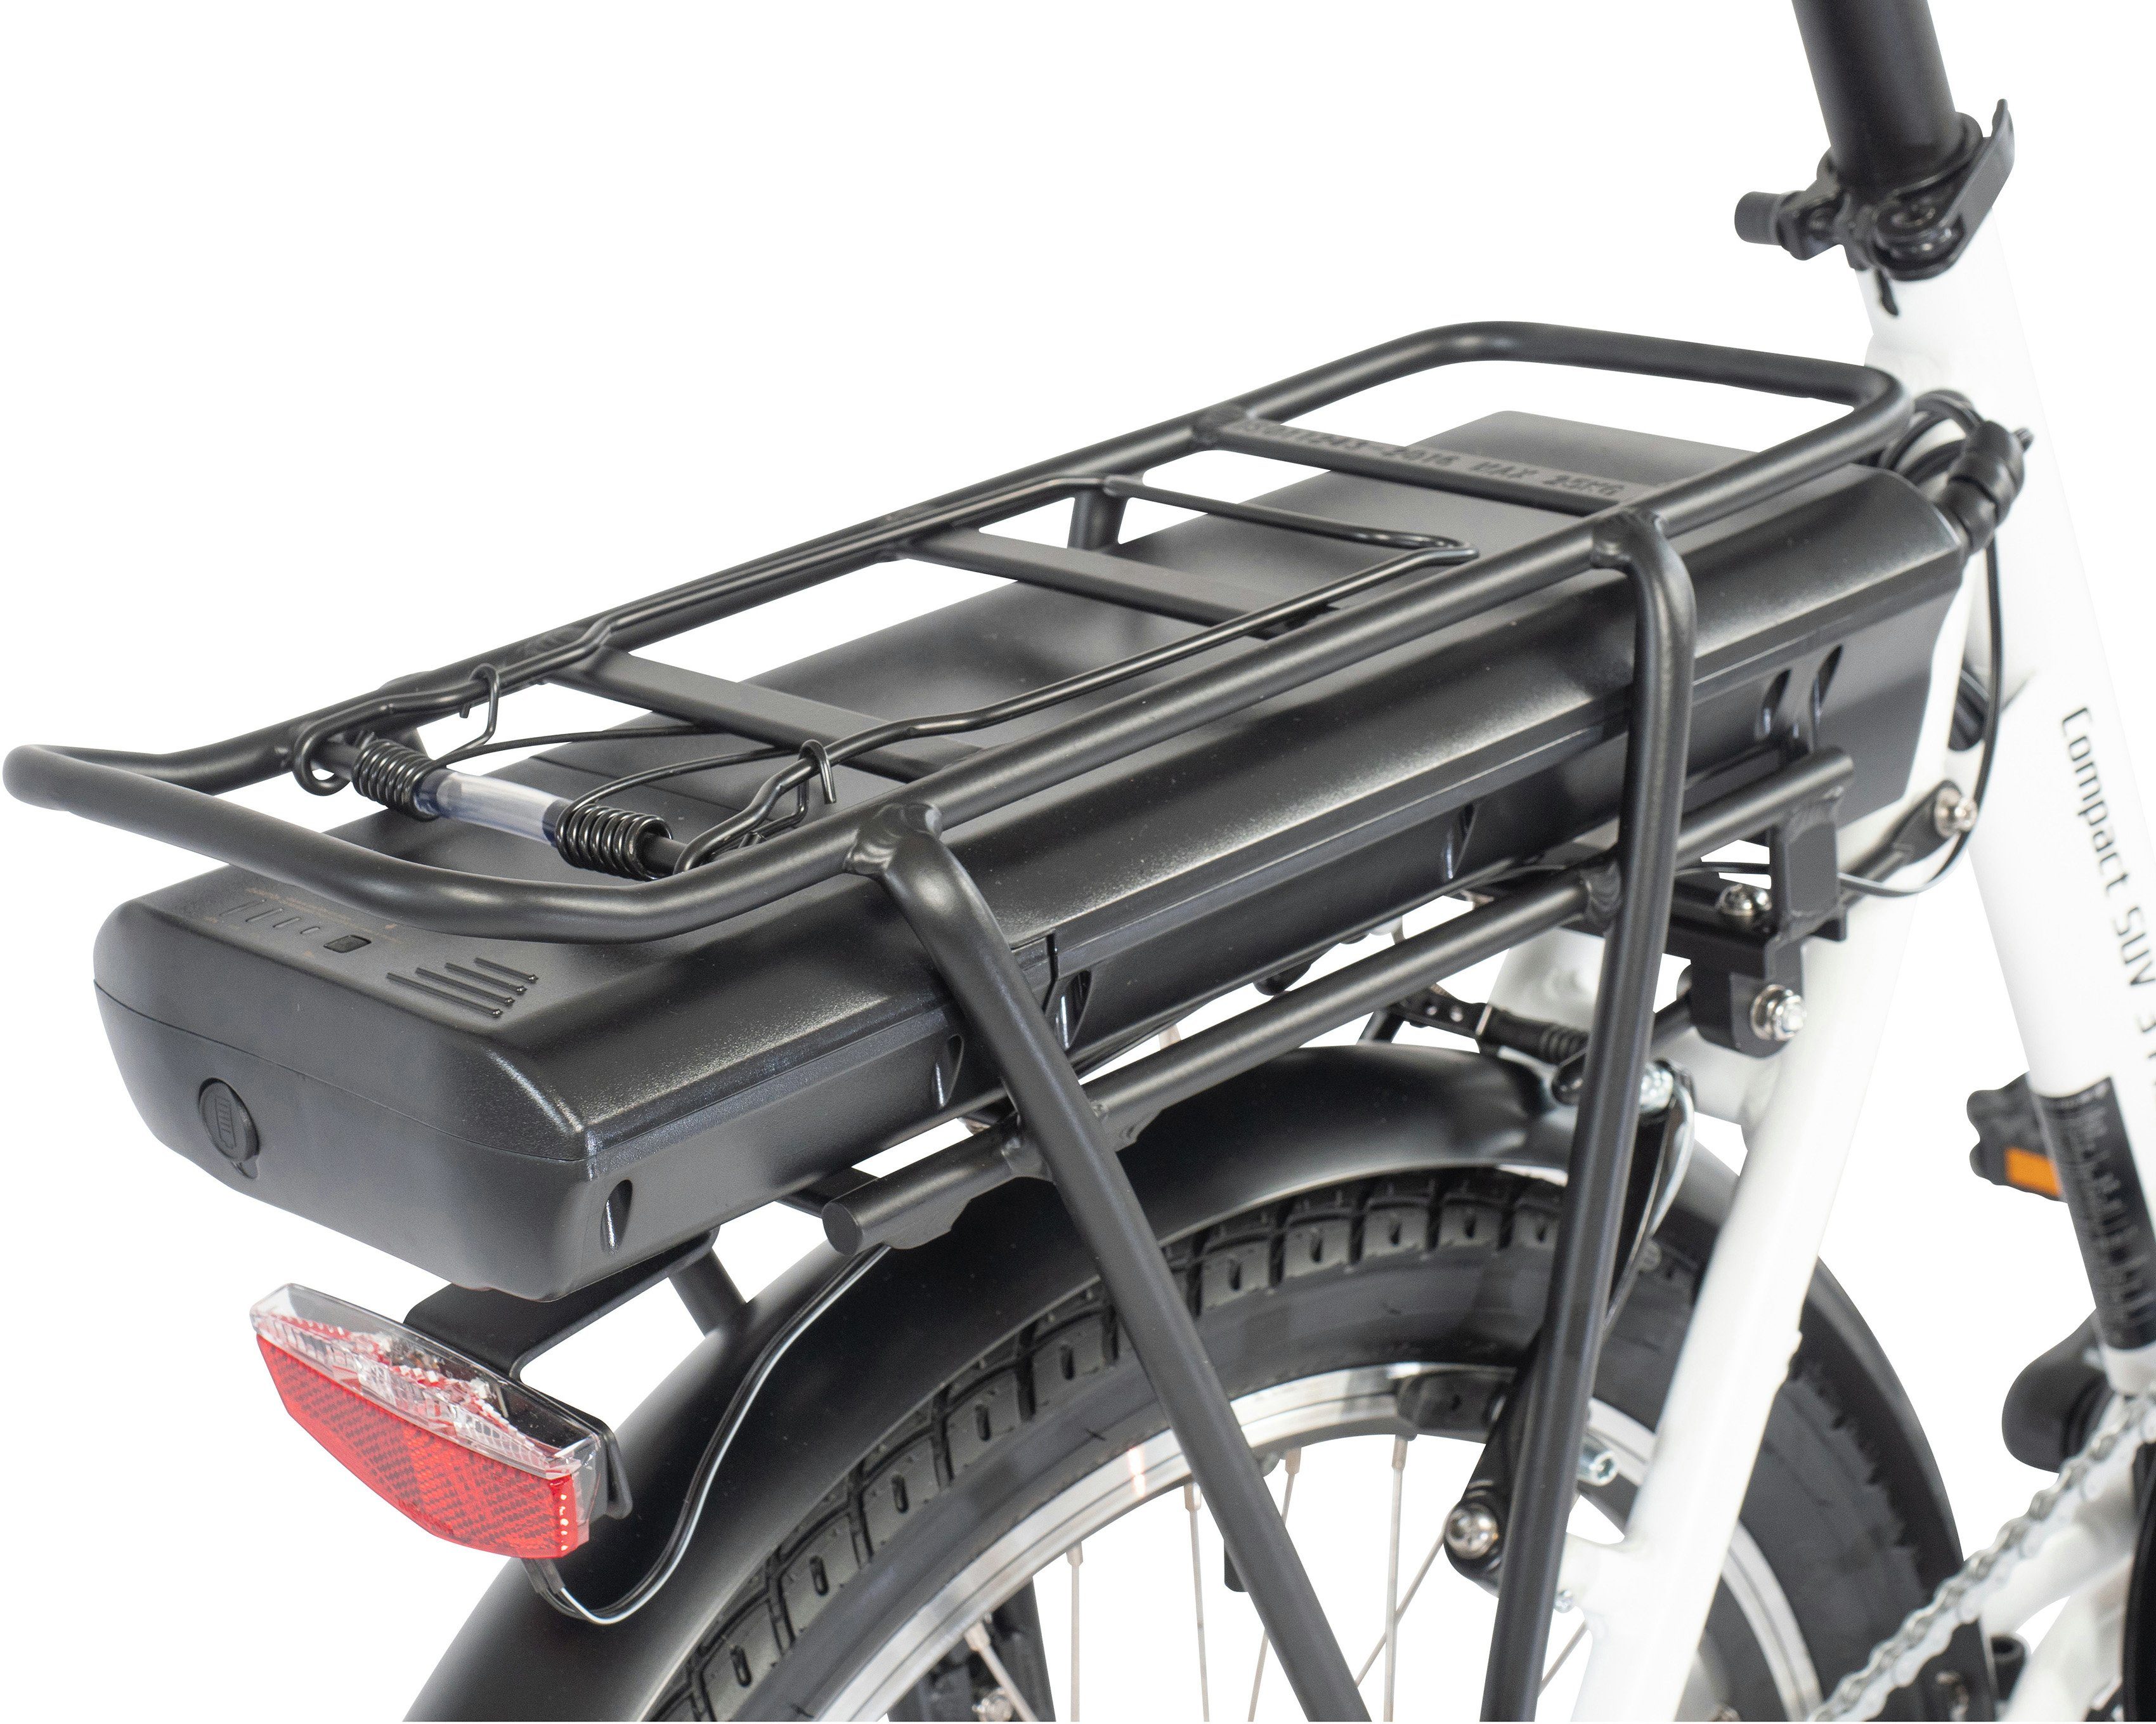 ALLEGRO E-Bike Compact SUV 3 Nexus 374 Shimano Akku 3 Plus 374, Wh Gang Schaltwerk, Nabenschaltung, Frontmotor